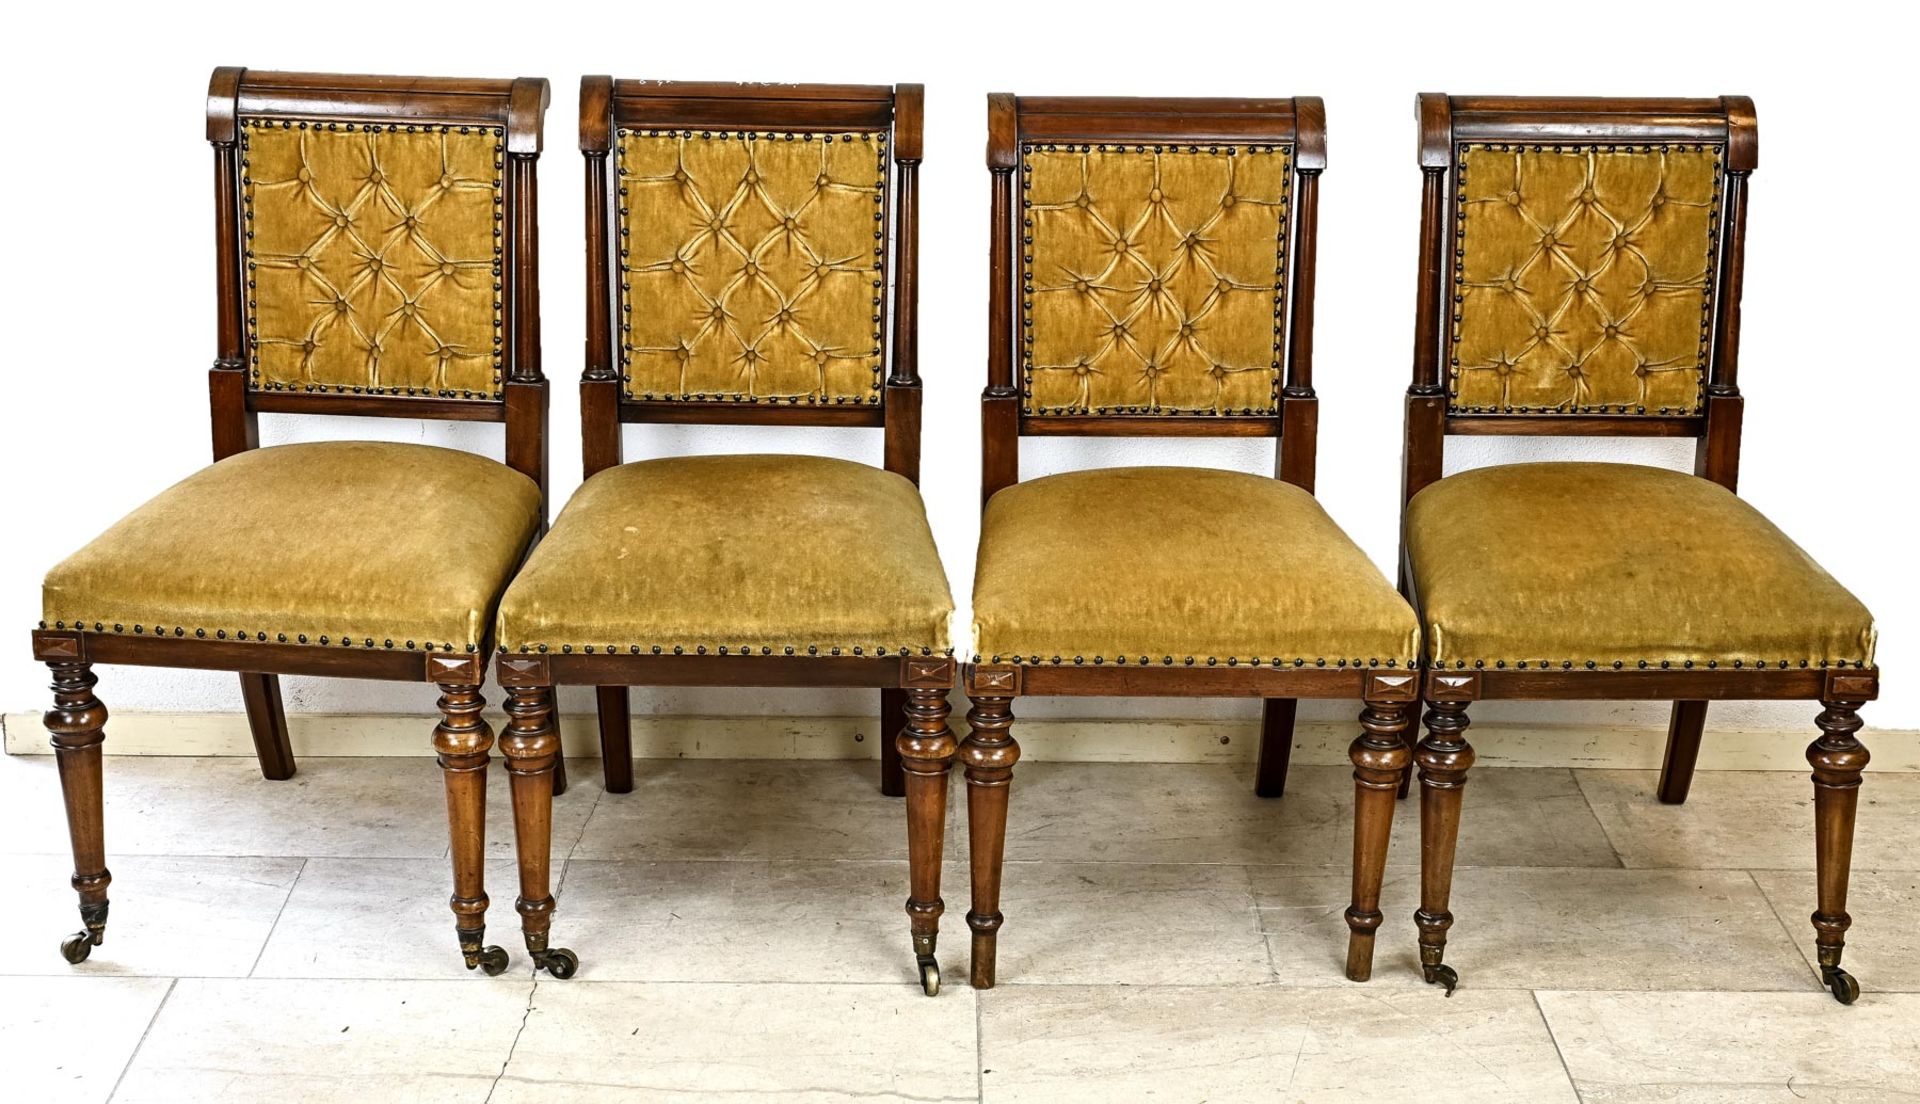 Four Gründerzeit chairs, 1880